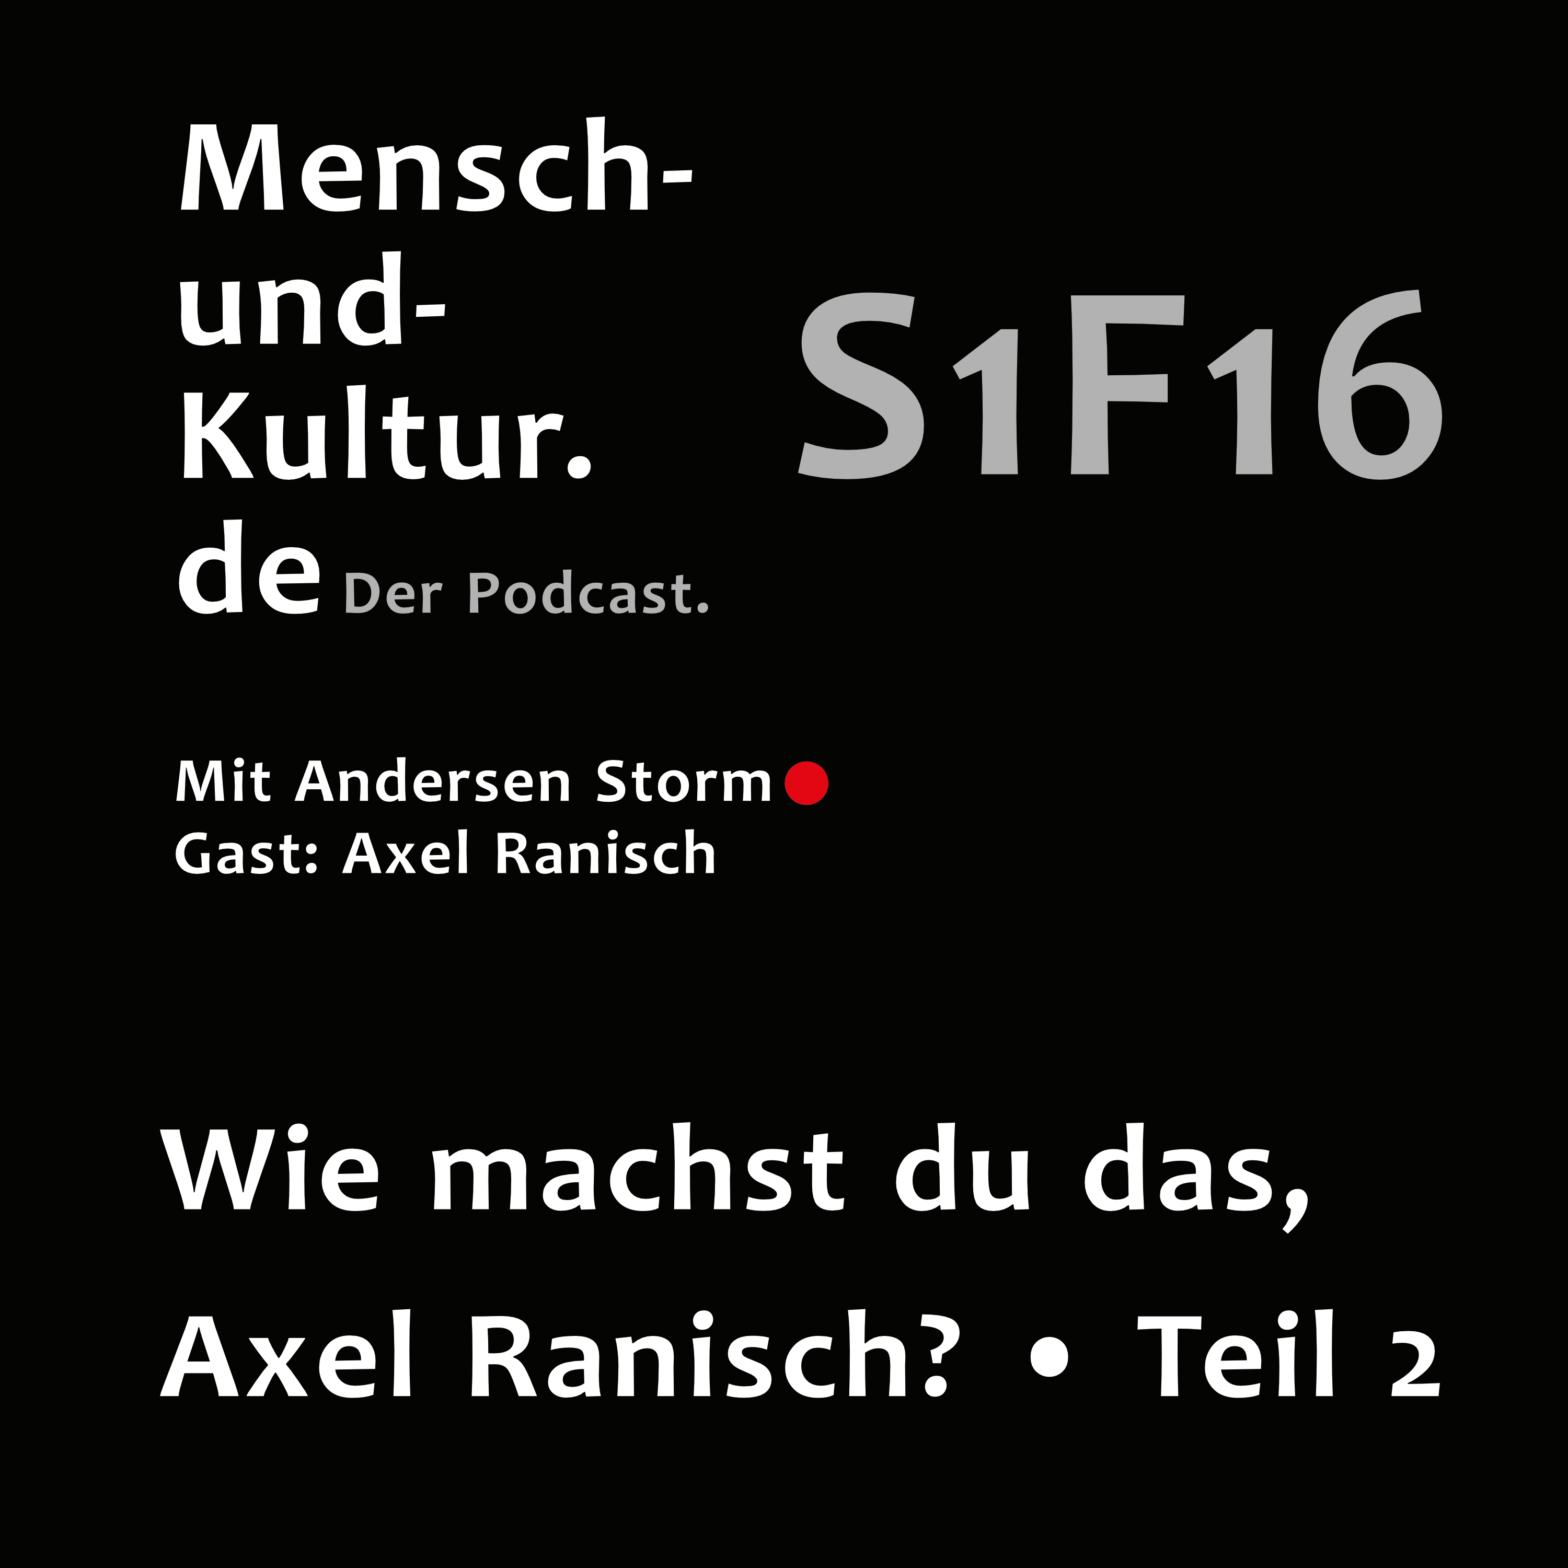 Podcastepisode S1F16, Mensch-und-Kultur.de - der Podcast